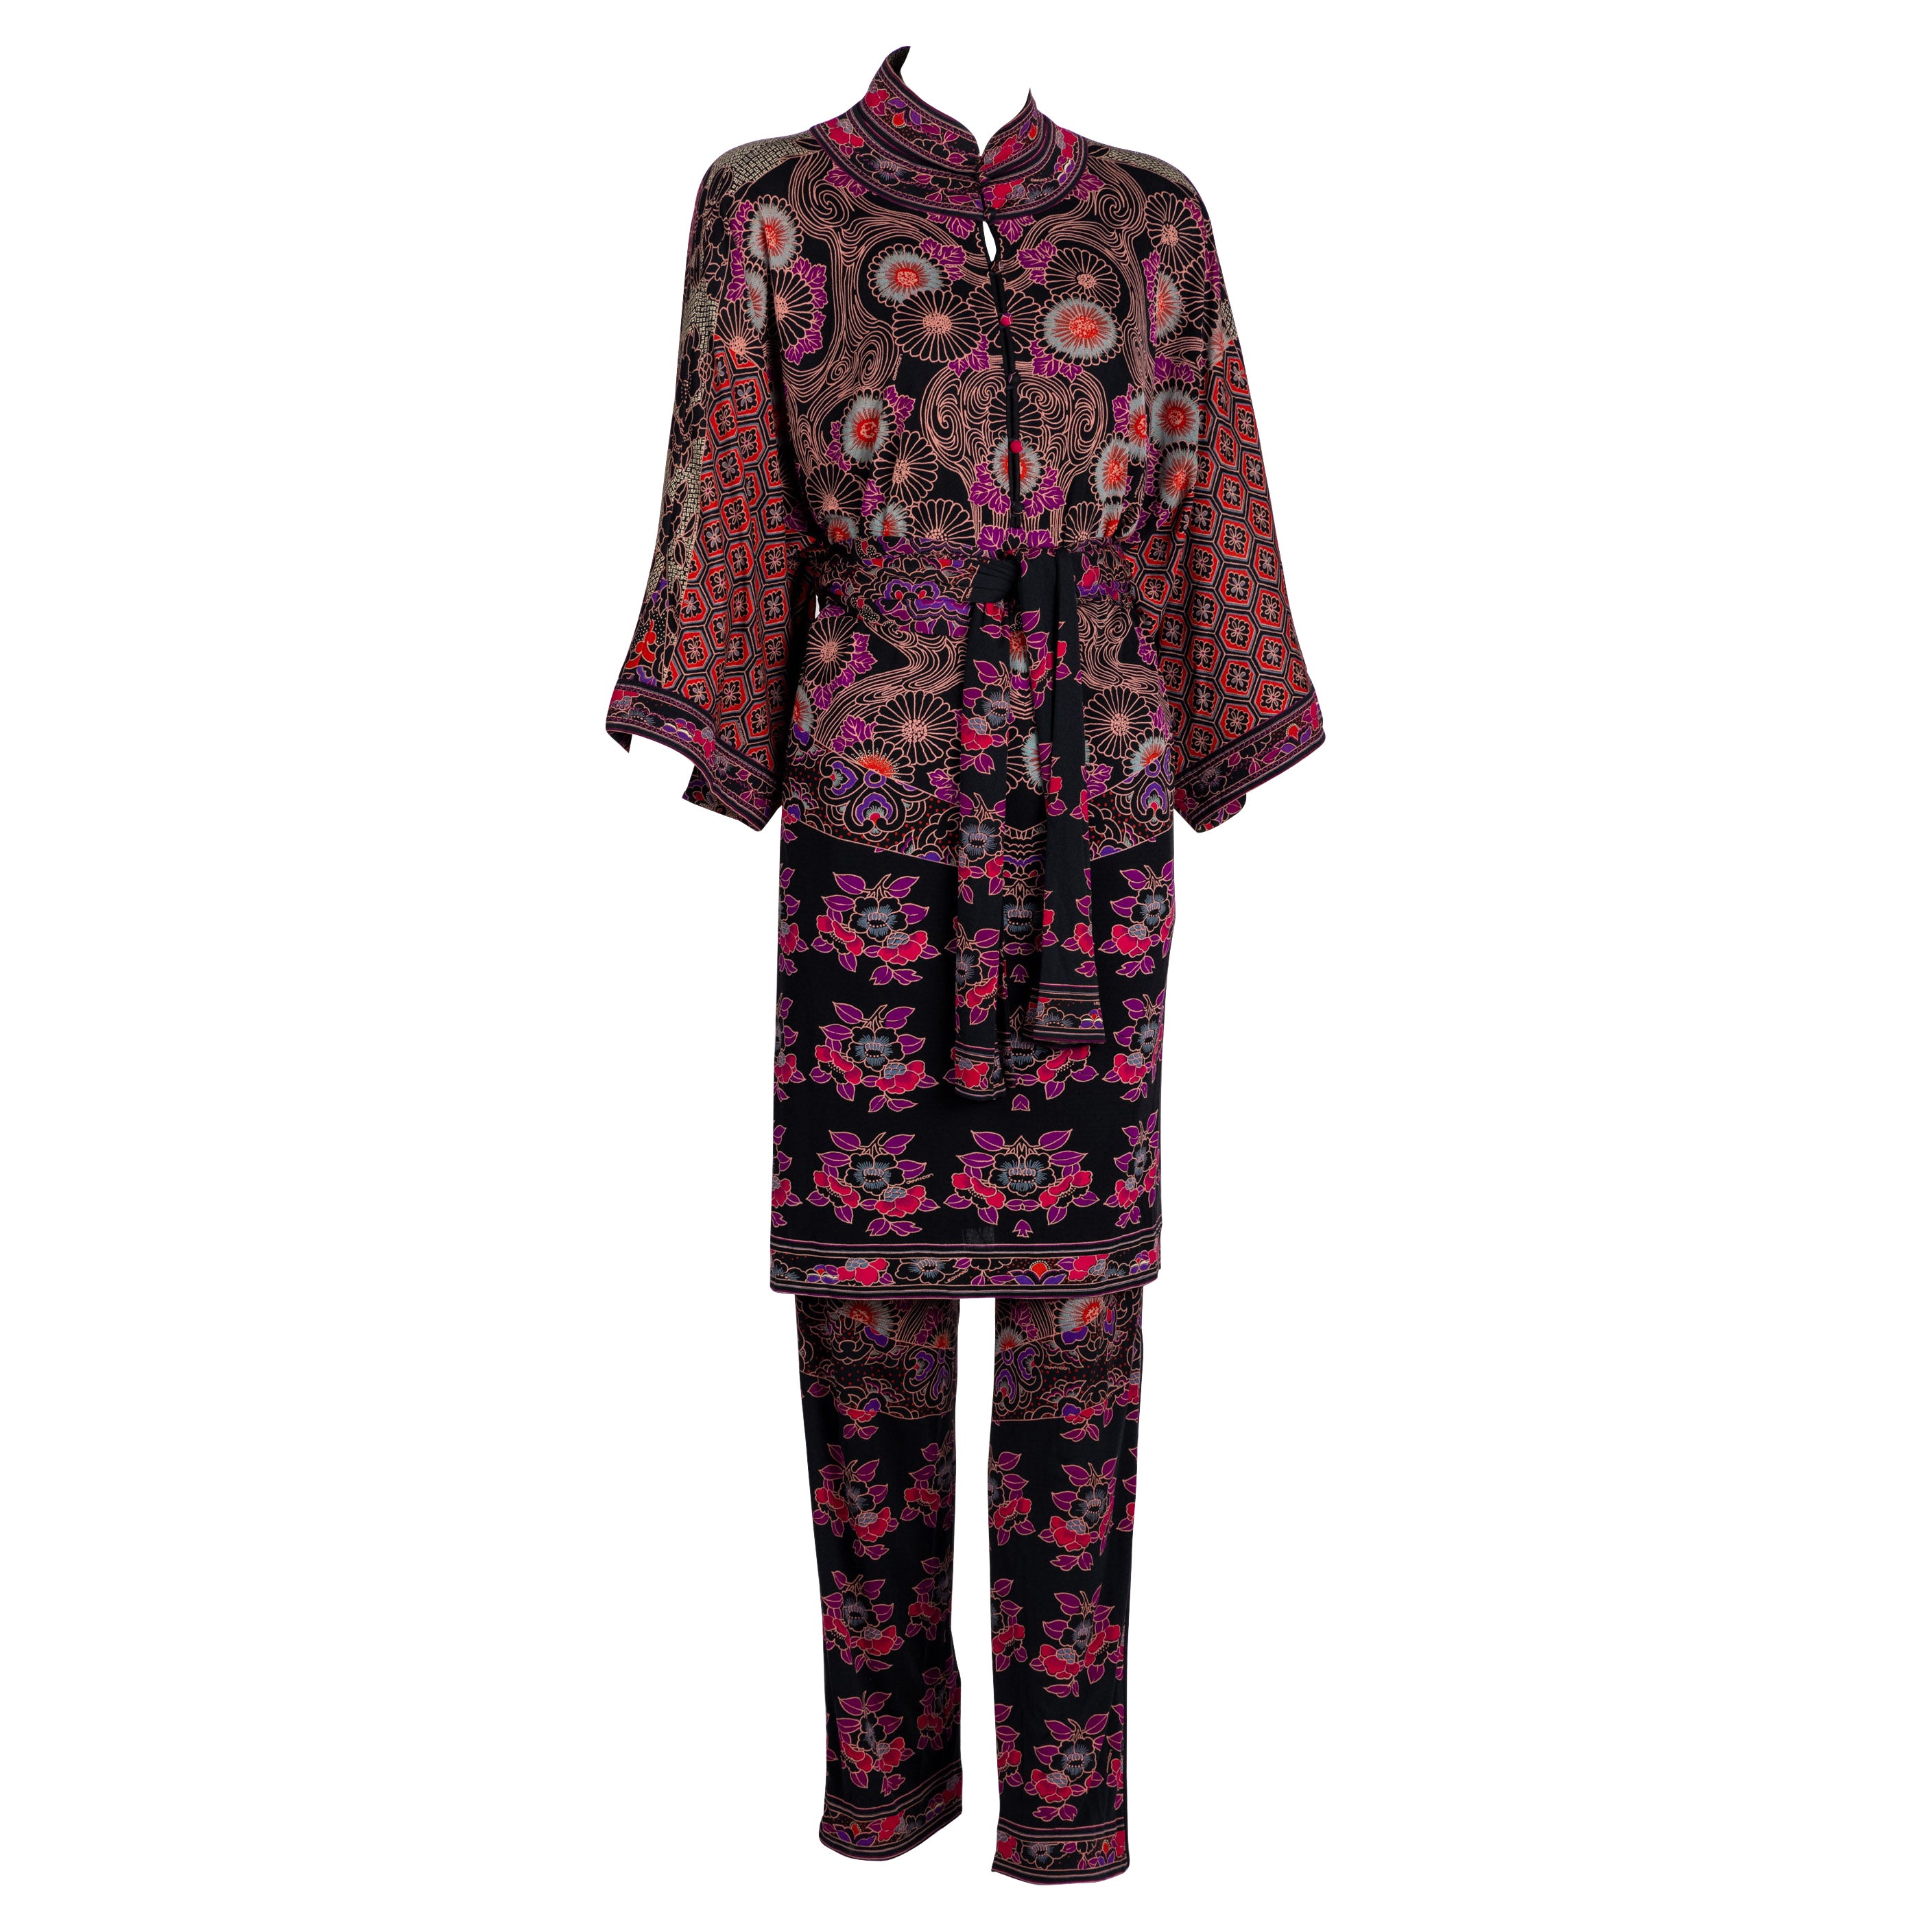  Vintage Leonard Paris Printed Silk  Mini Dress / Tunic & Pants Set 1970s